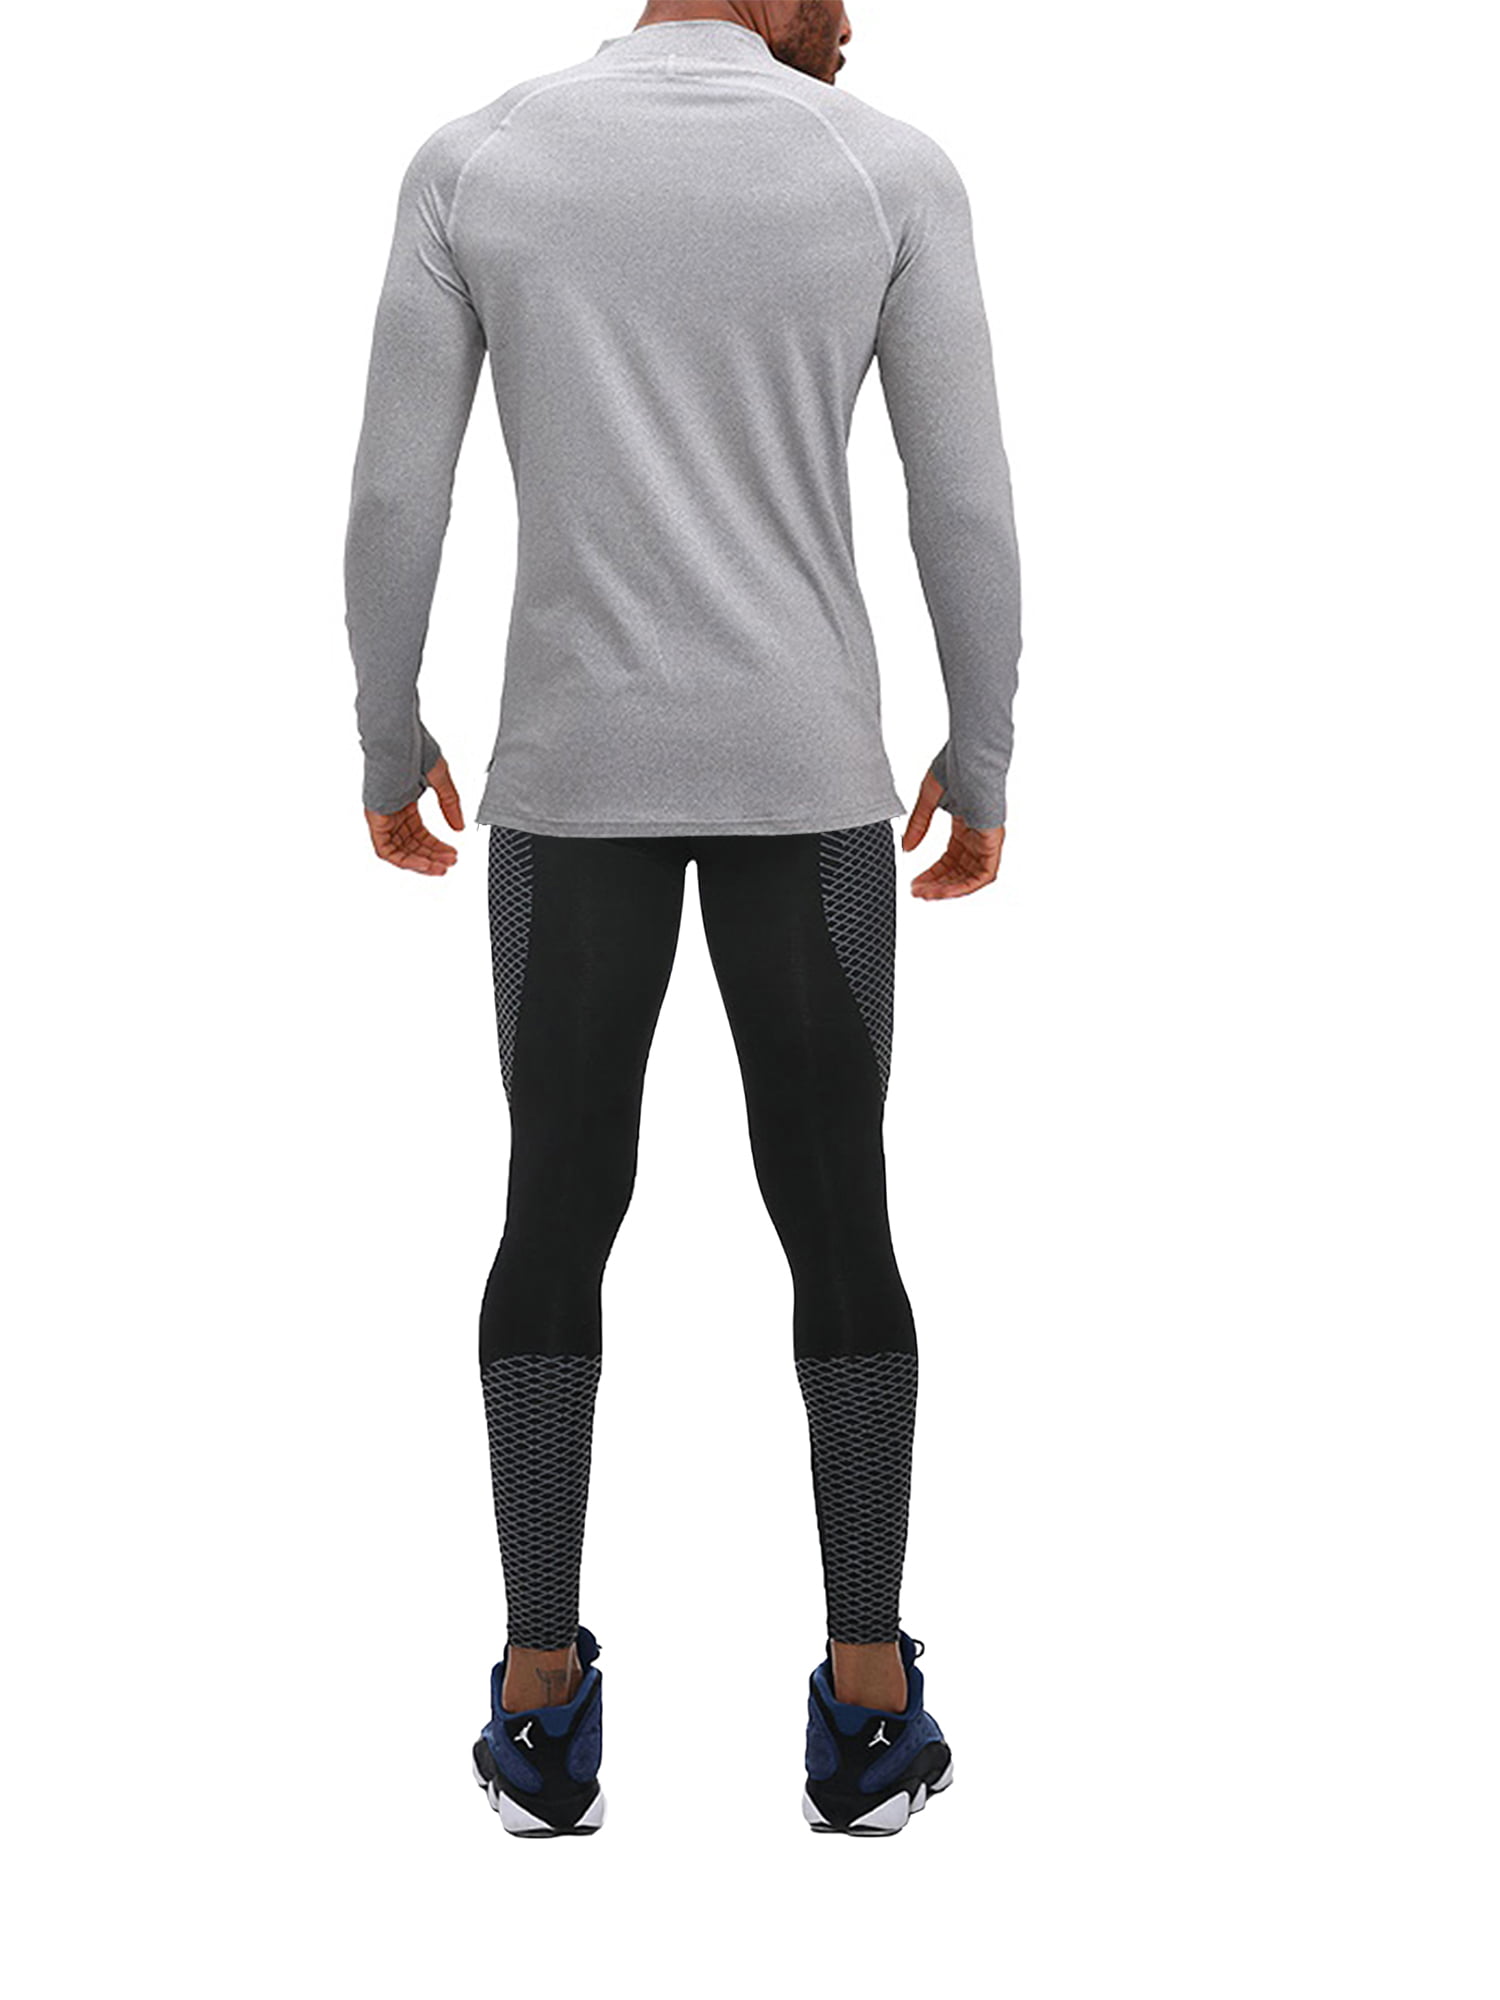 mens compression tight shirts and tights pants set skin under baselayer XS~2XL 